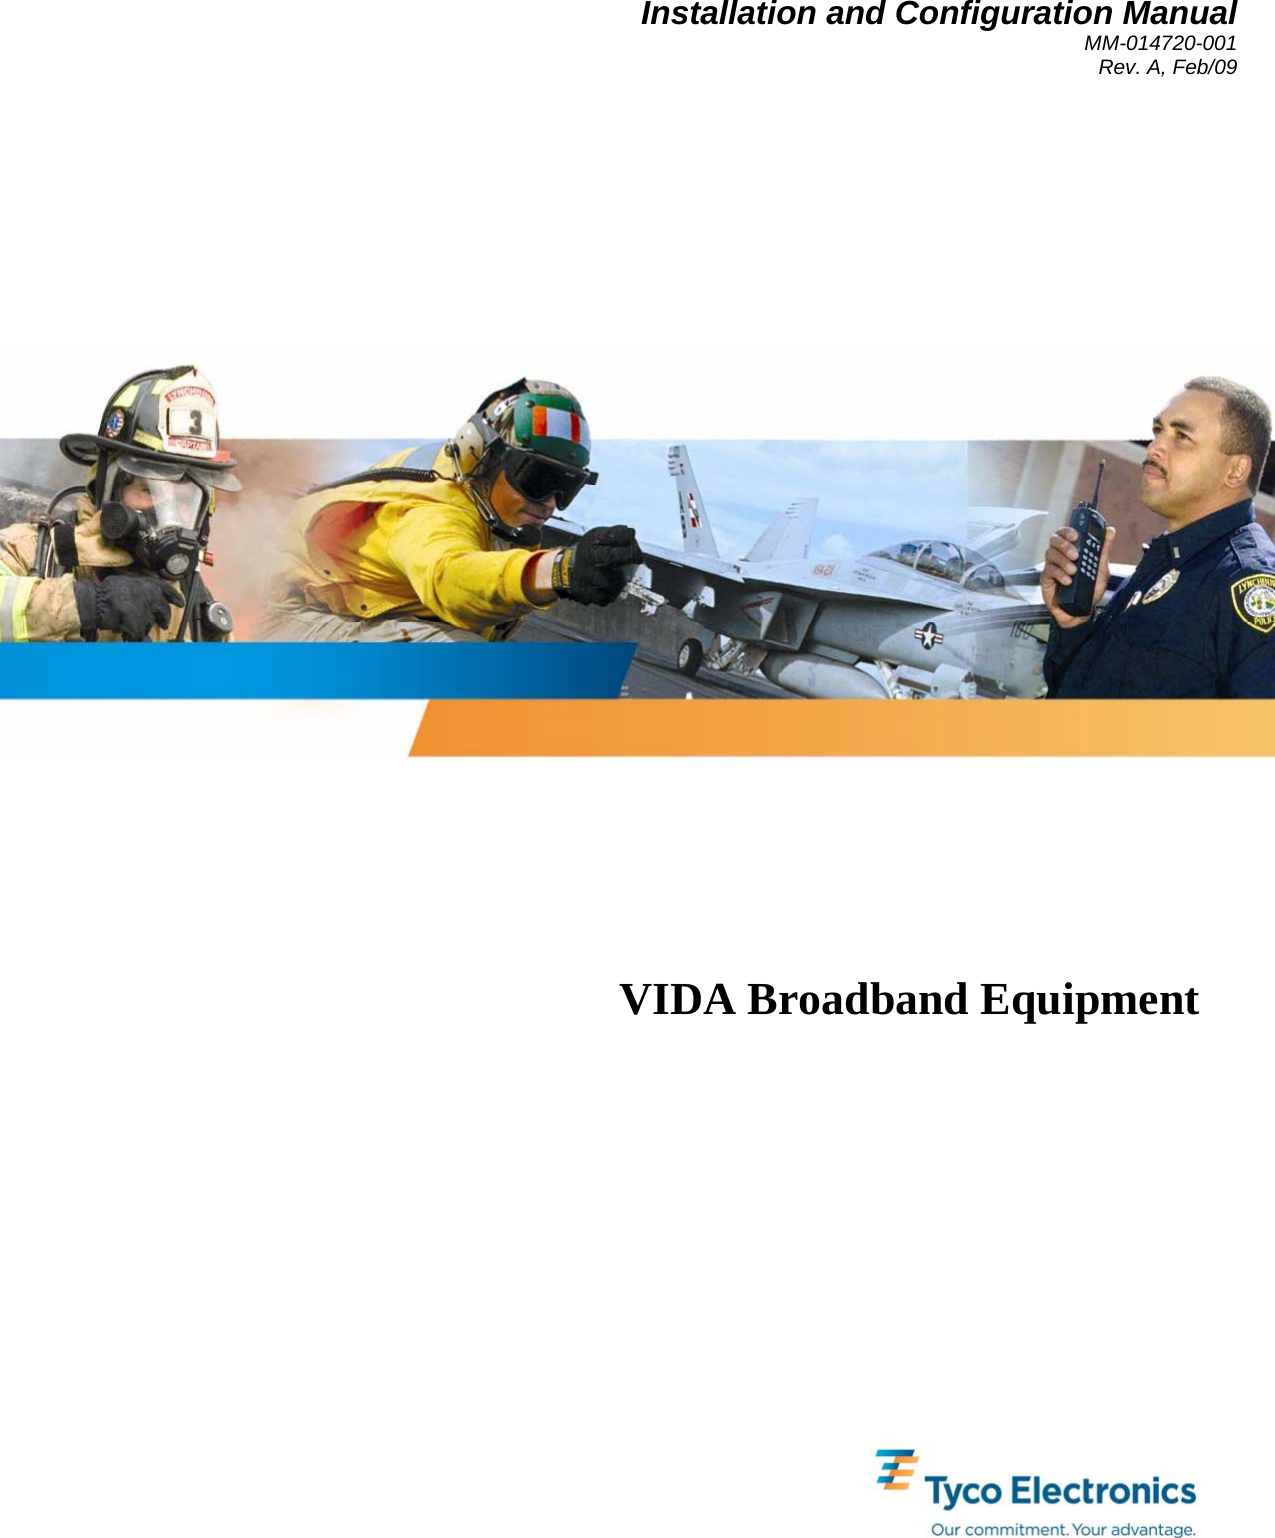 Installation and Configuration Manual MM-014720-001 Rev. A, Feb/09      VIDA Broadband Equipment  